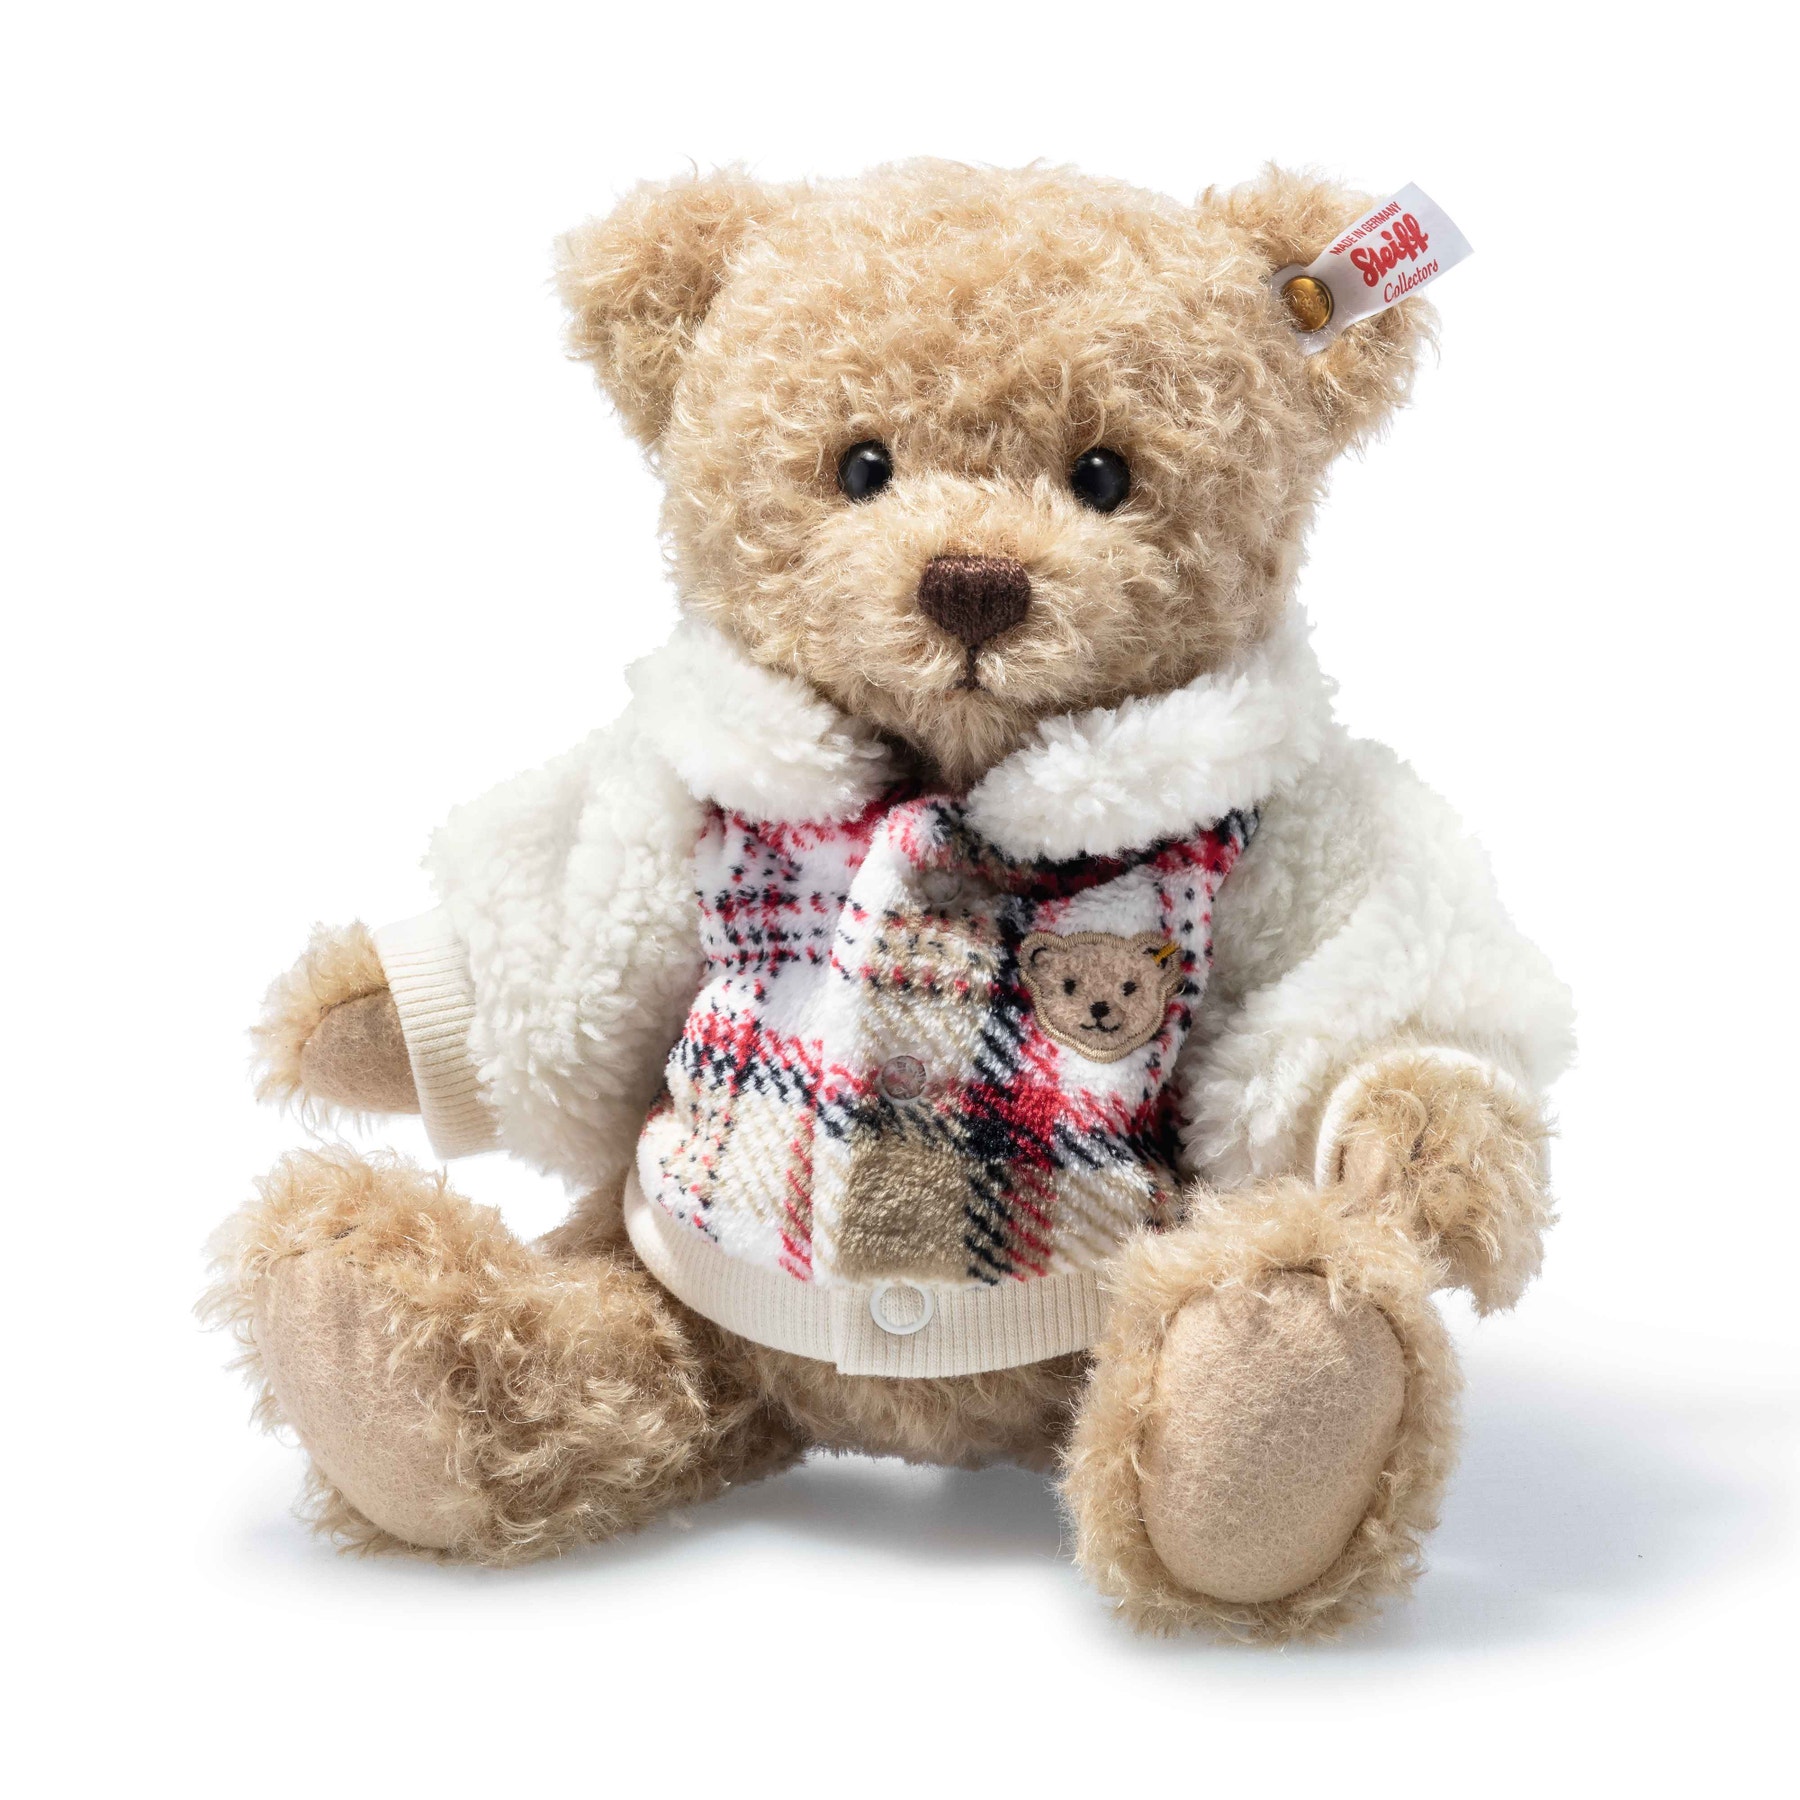 Ben Teddy bear with winter jacket